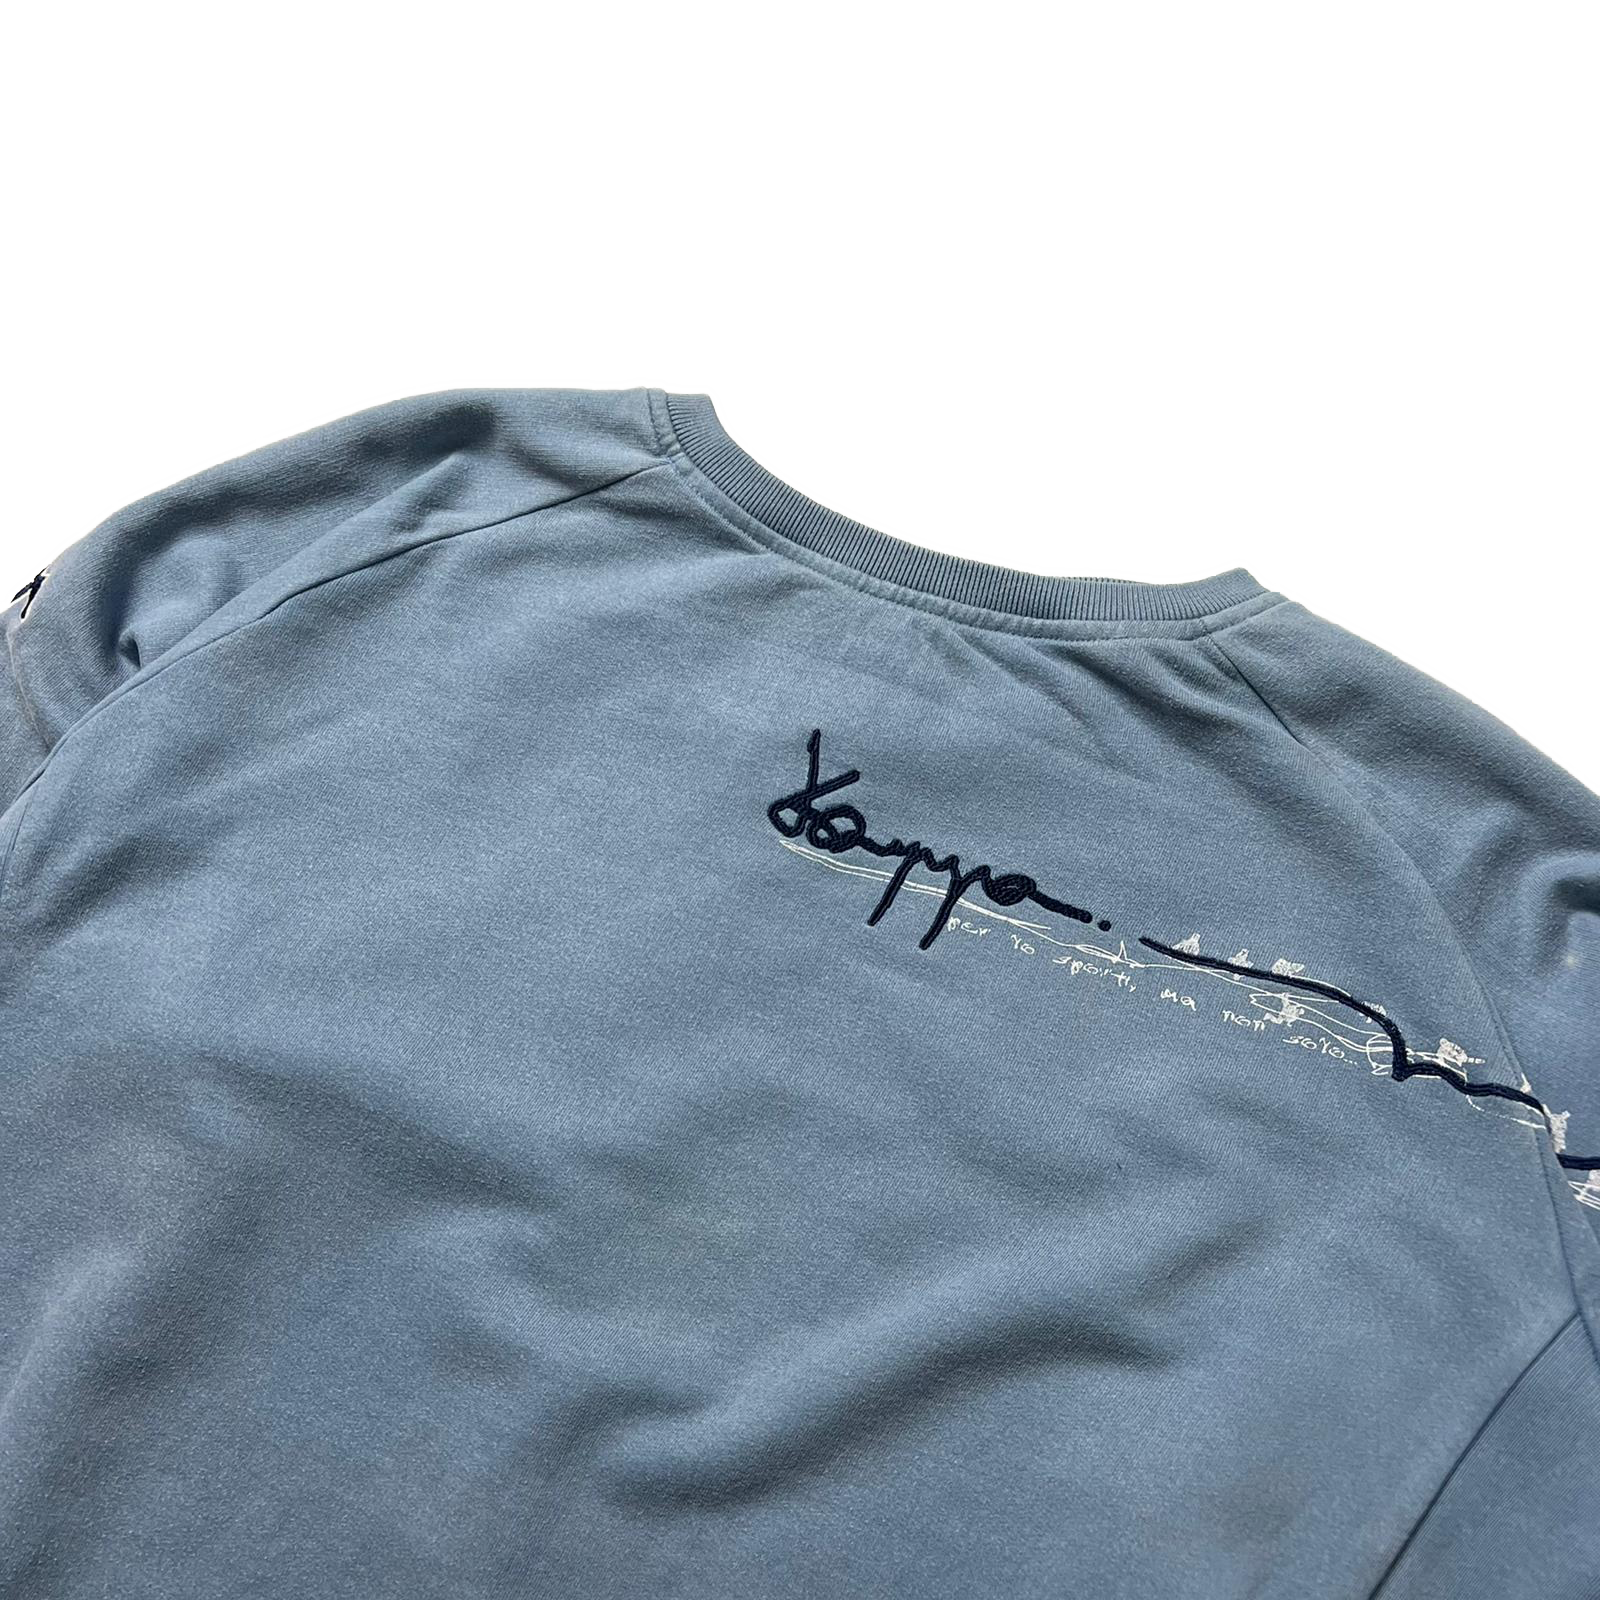 00's Kappa sweatshirt